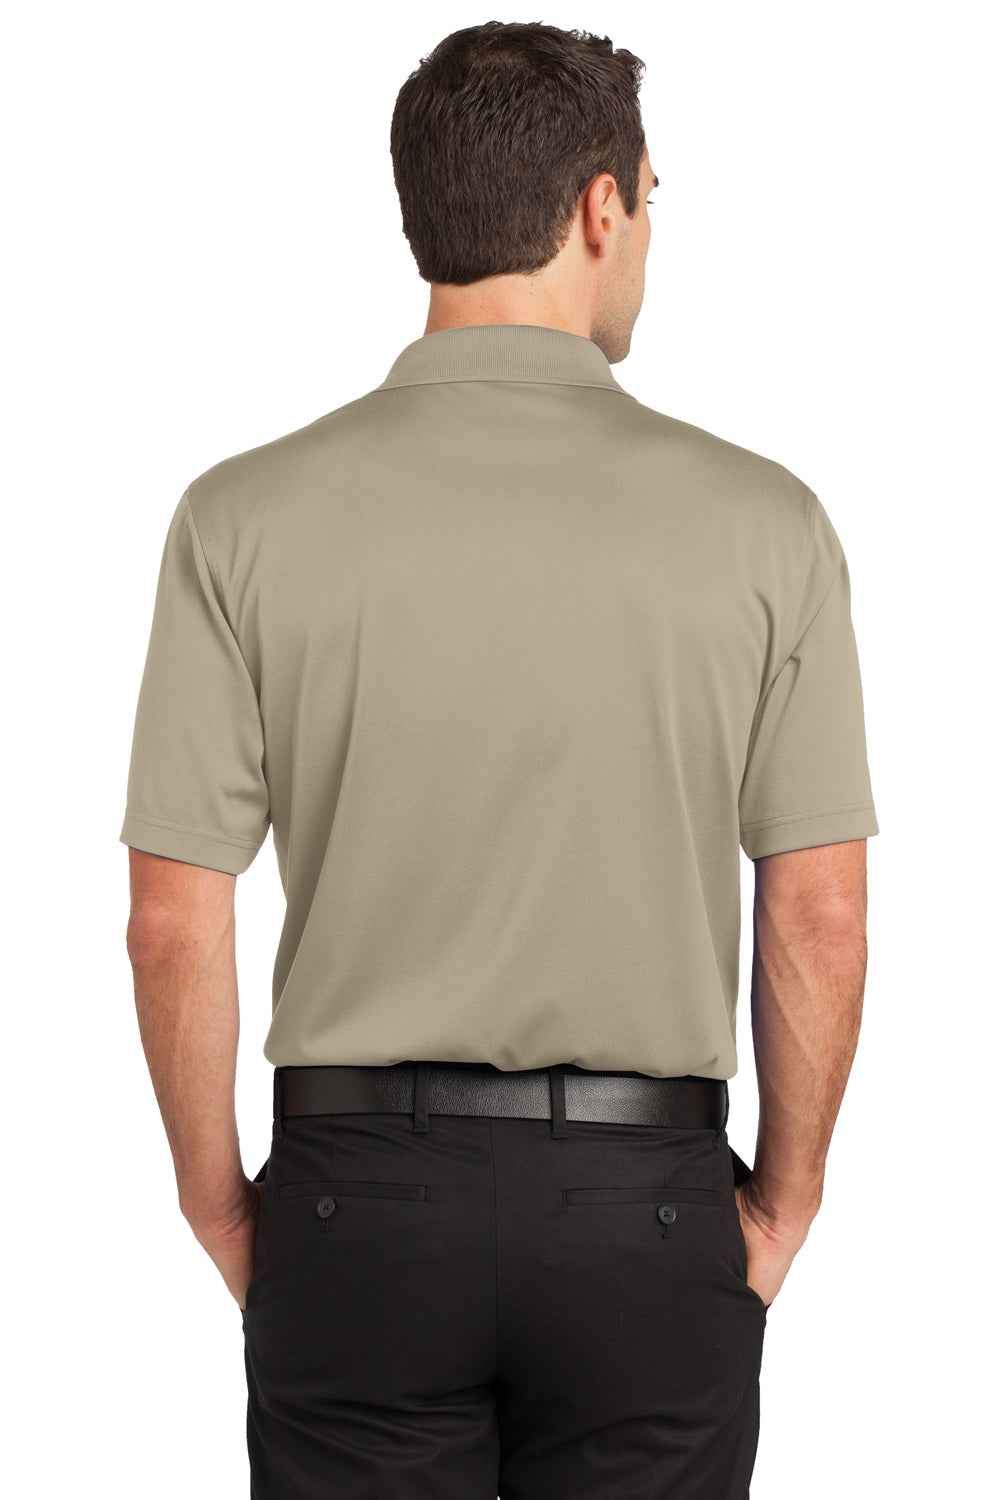 CornerStone CS412P Mens Select Moisture Wicking Short Sleeve Polo Shirt w/ Pocket Tan Brown Back